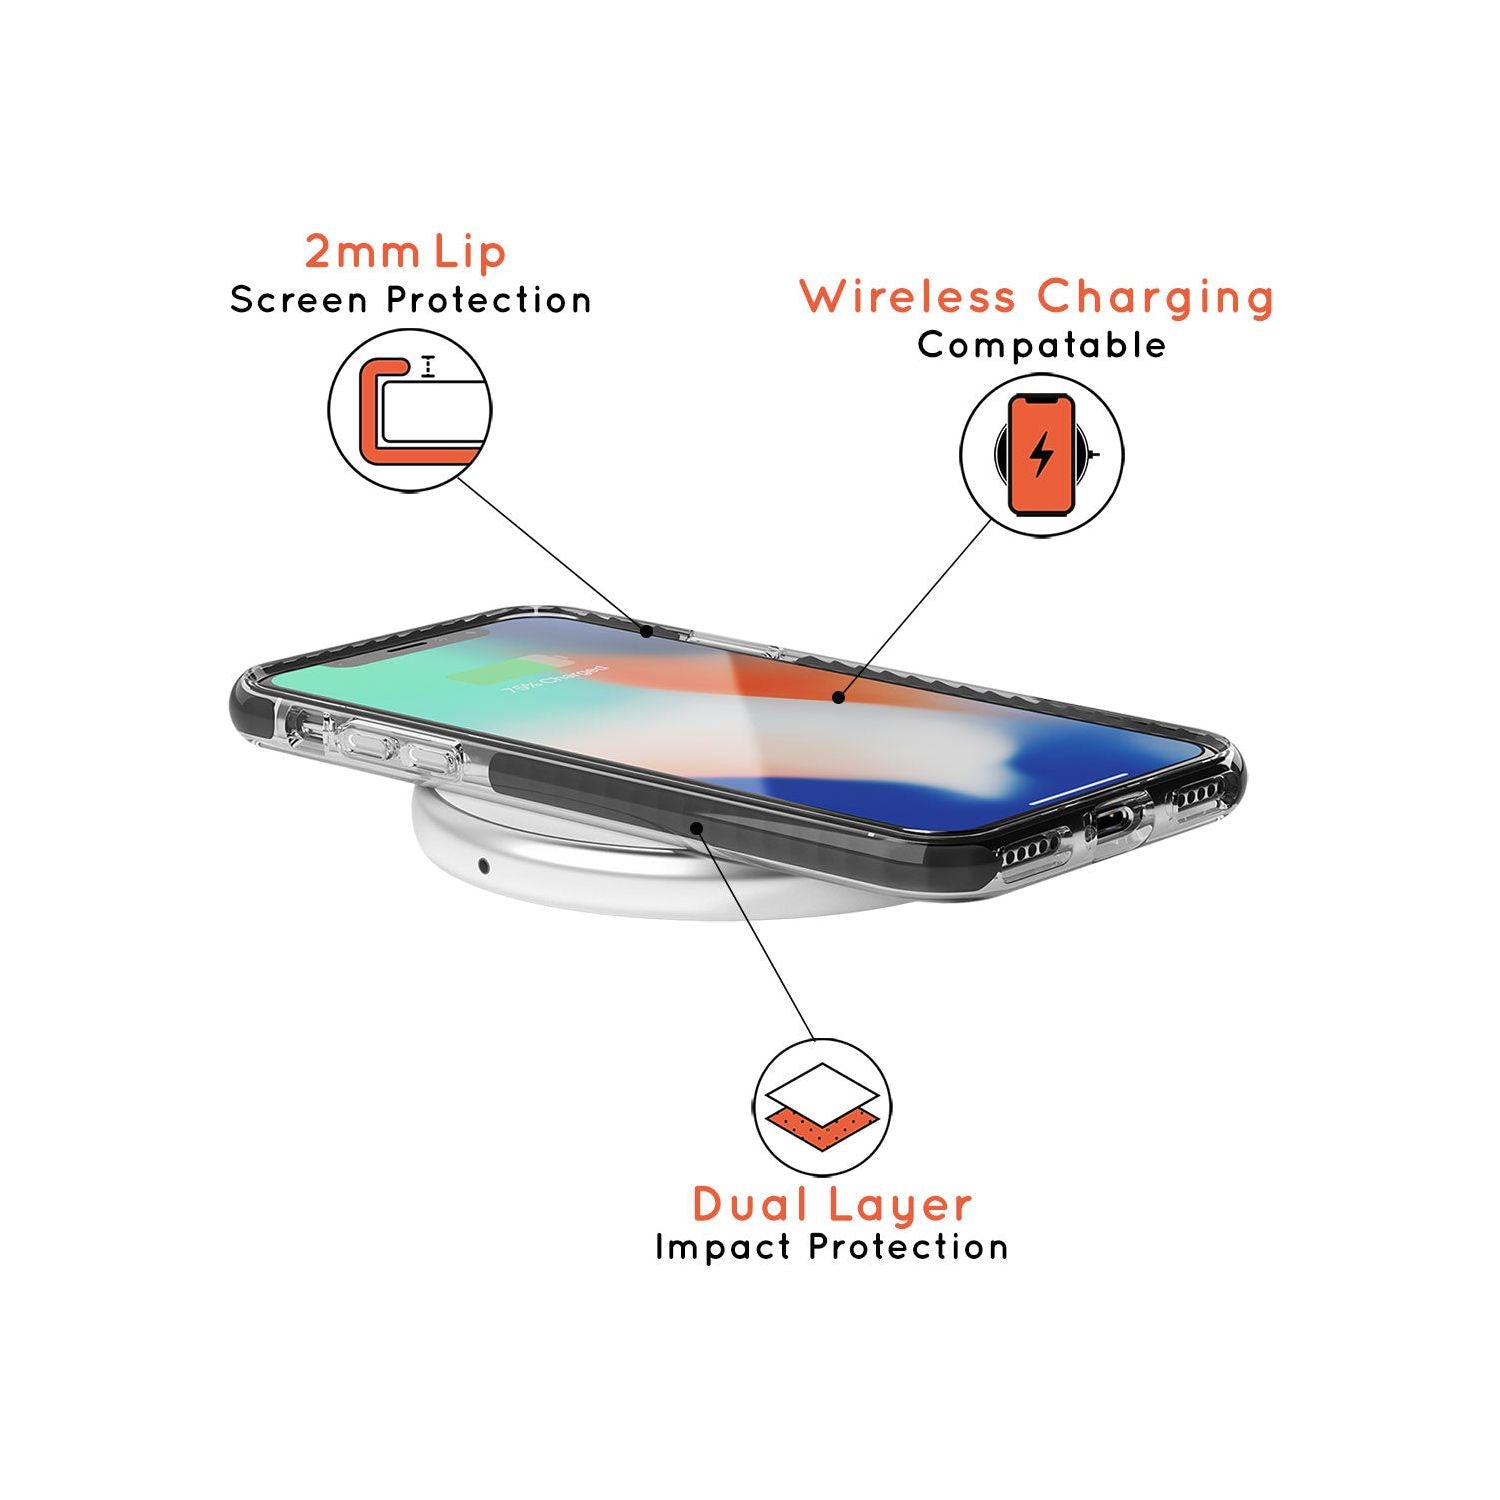 Aries Emblem - Transparent Design Black Impact Phone Case for iPhone X XS Max XR